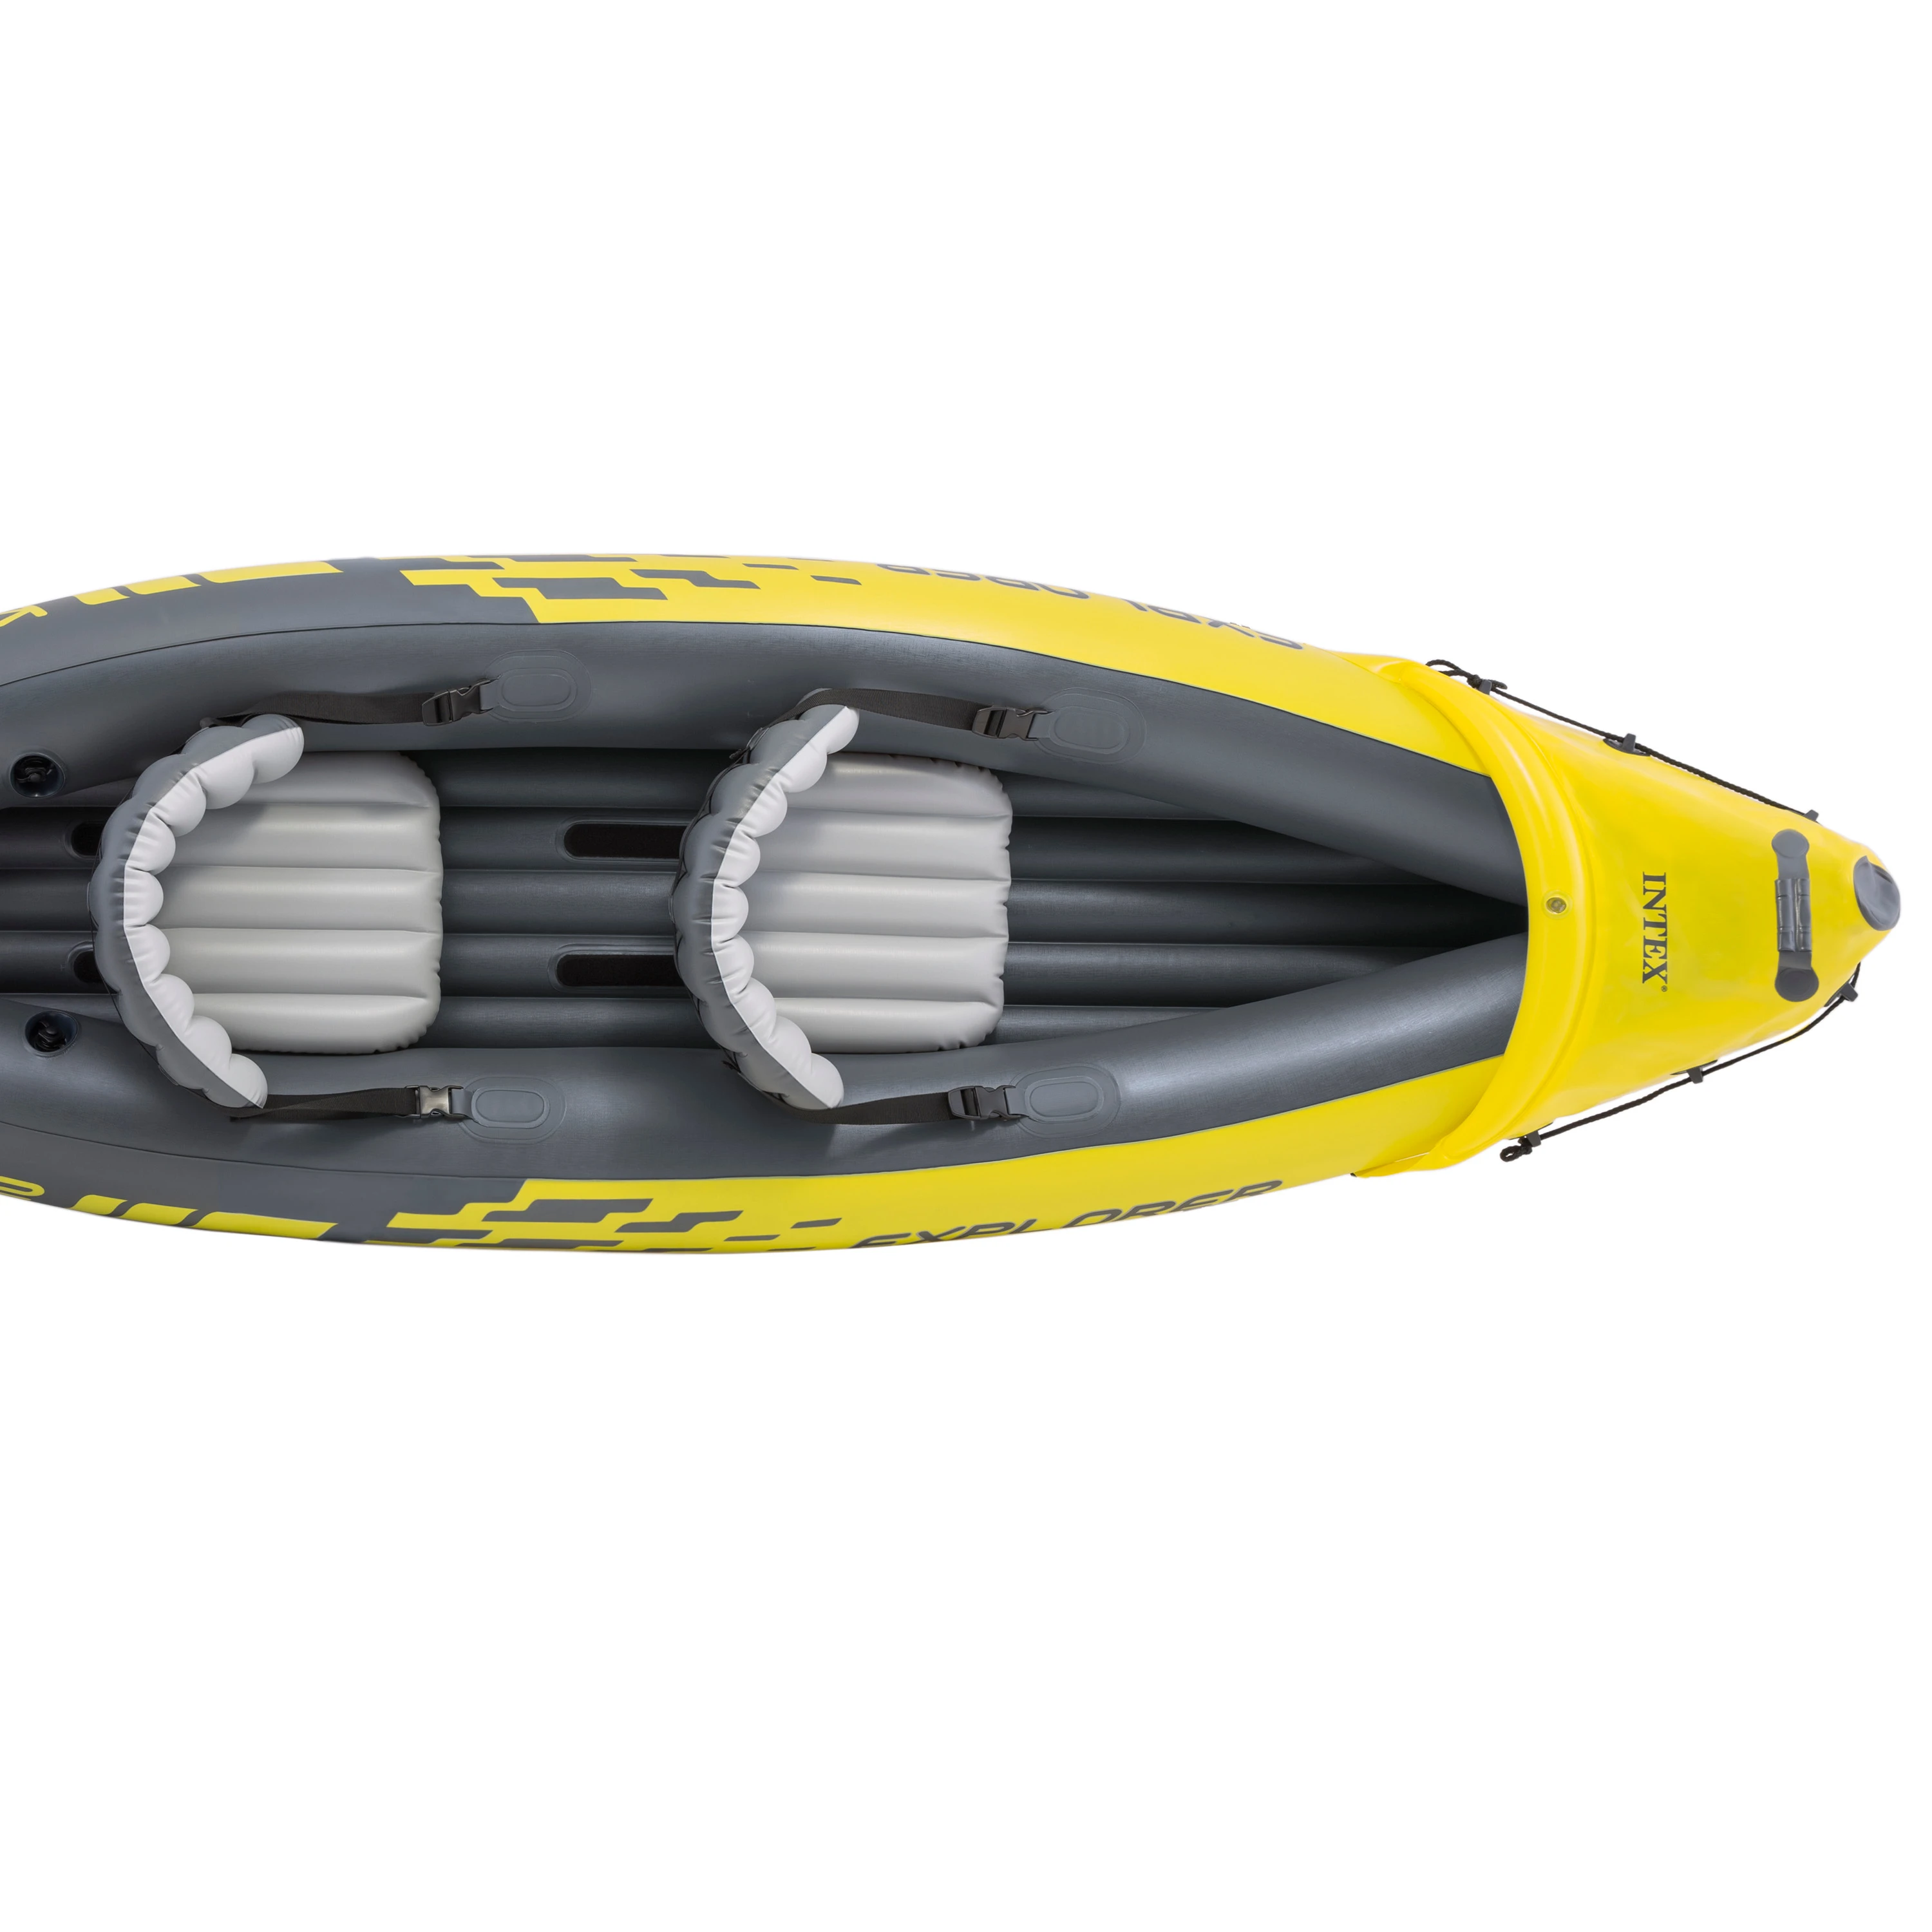 
Pool accesorize floats   Canoe Inflatable Kayak Intex 68307 K2   outdoors activities in the nature   water fun  (1700001439526)